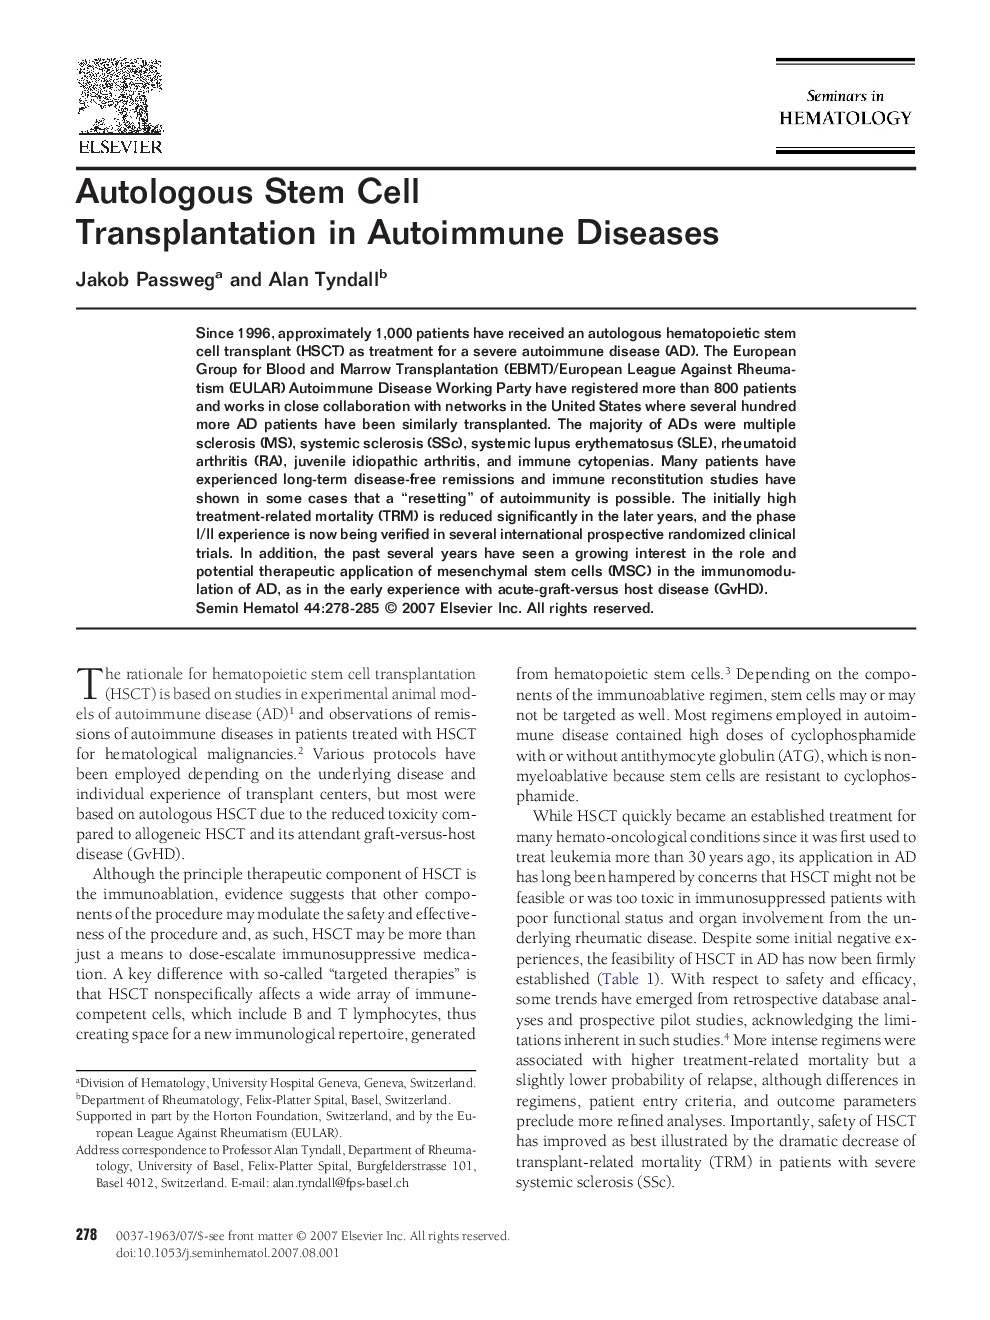 Autologous Stem Cell Transplantation in Autoimmune Diseases